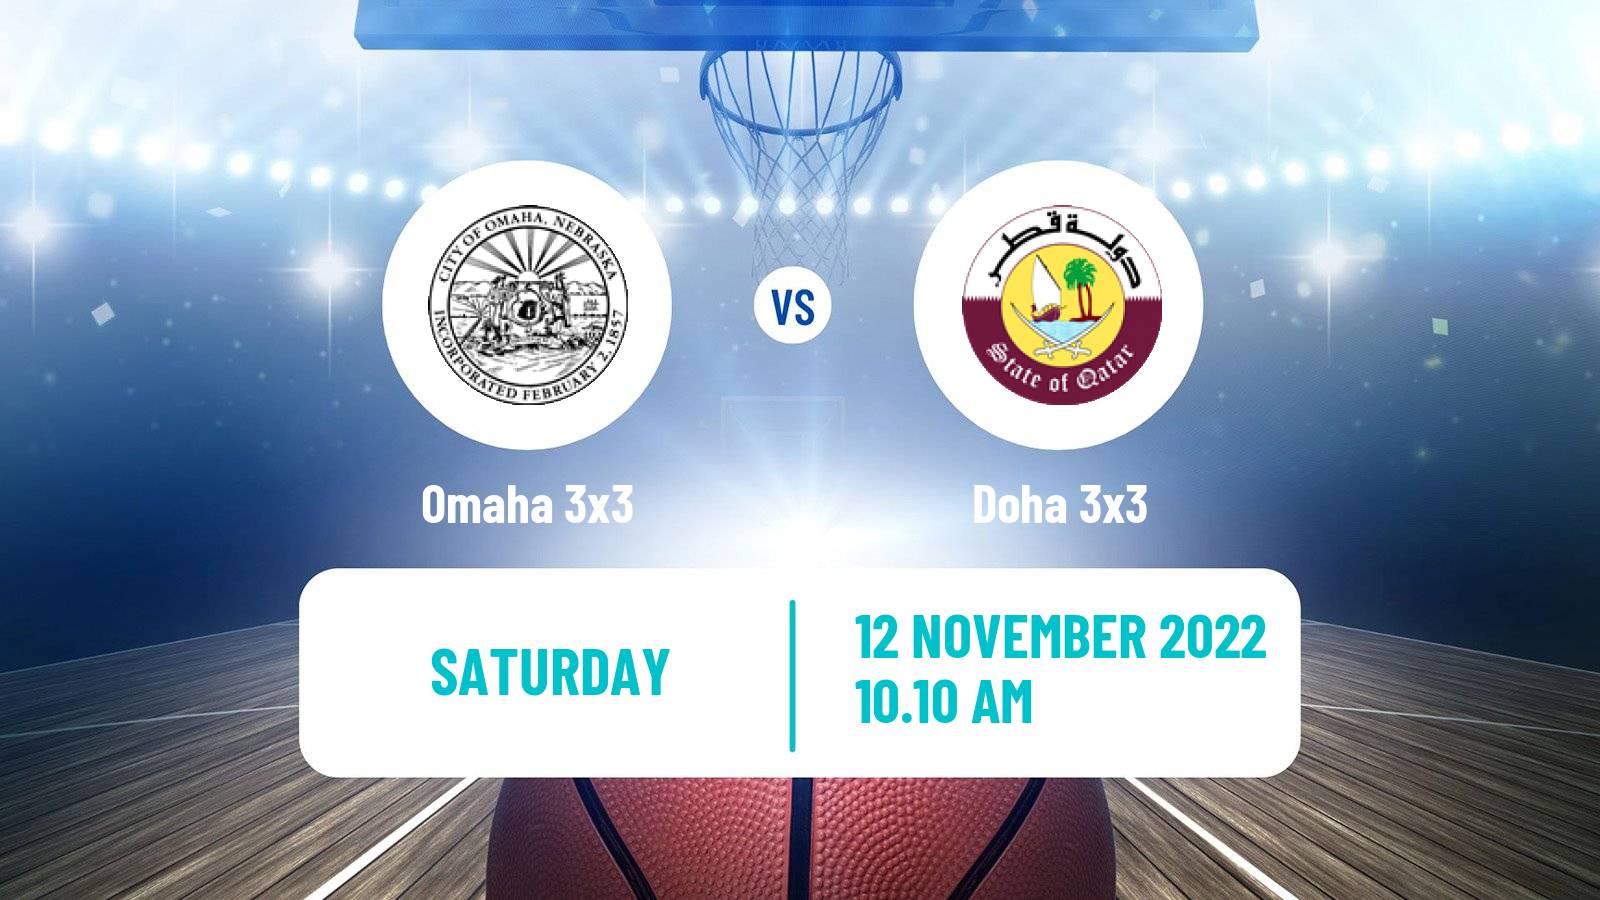 Basketball World Tour Riyadh 3x3 Omaha 3x3 - Doha 3x3